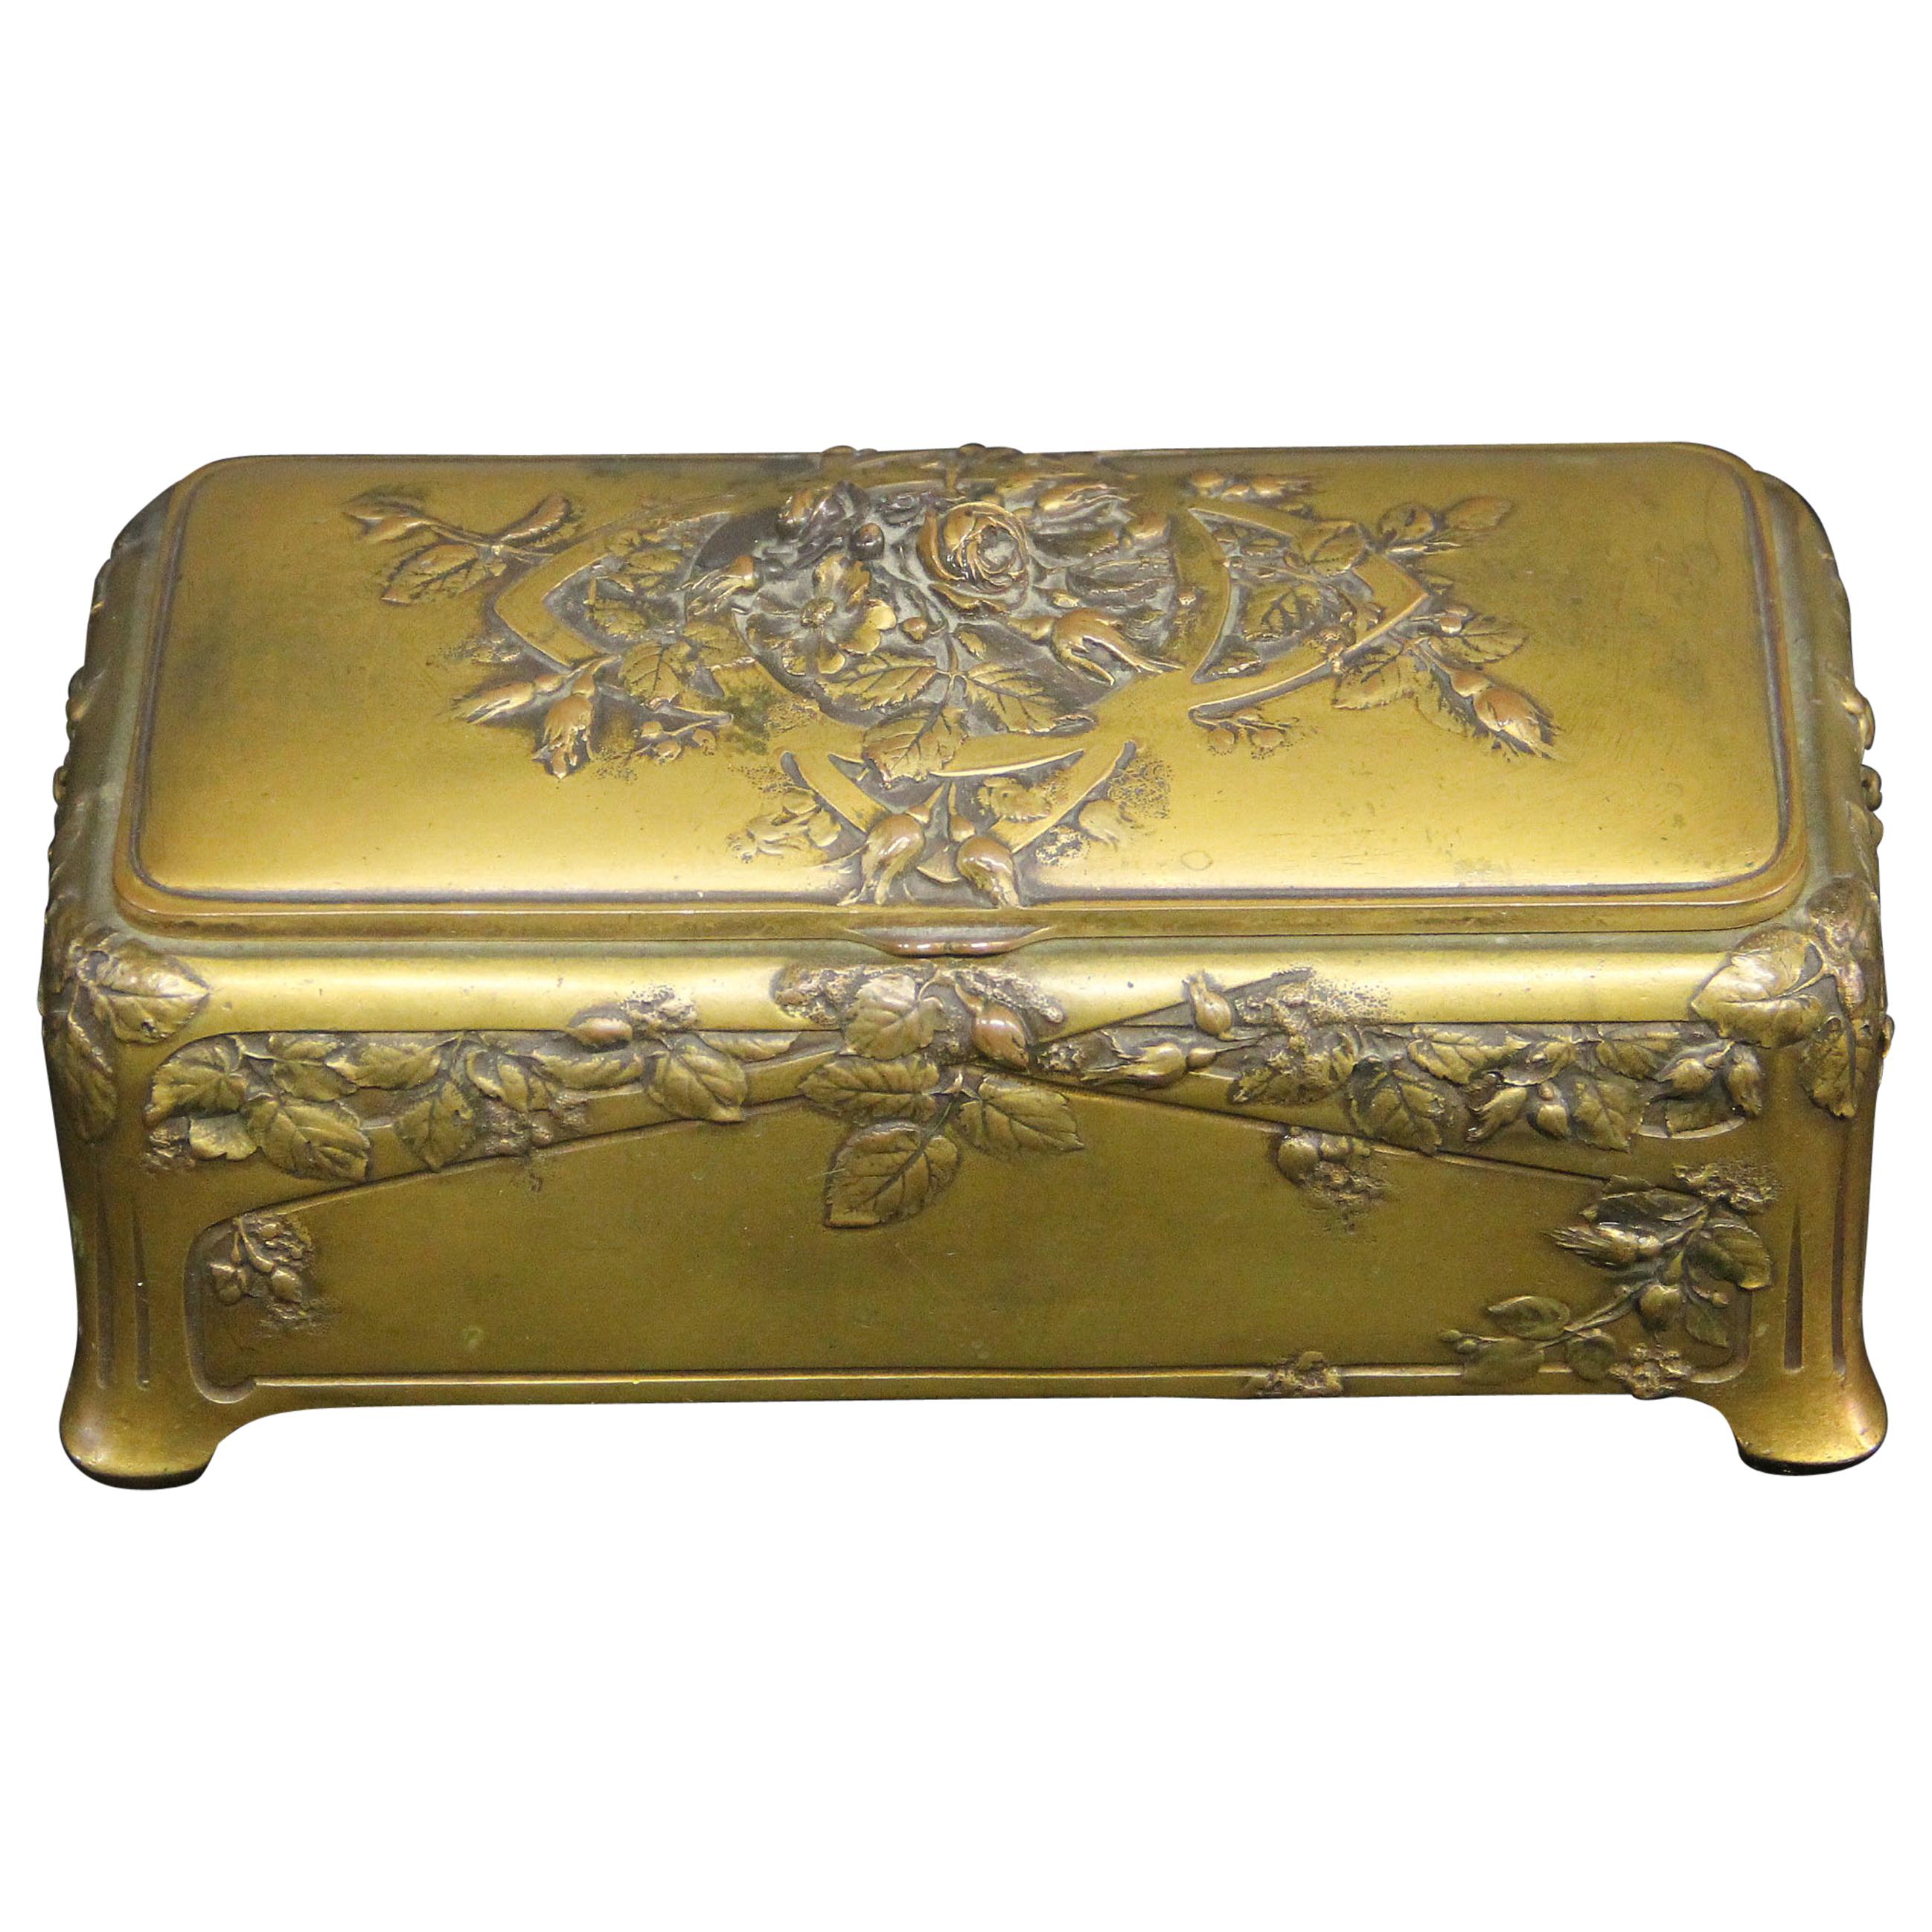 Interesting Late 19th Century Gilt Bronze Jewelry Box